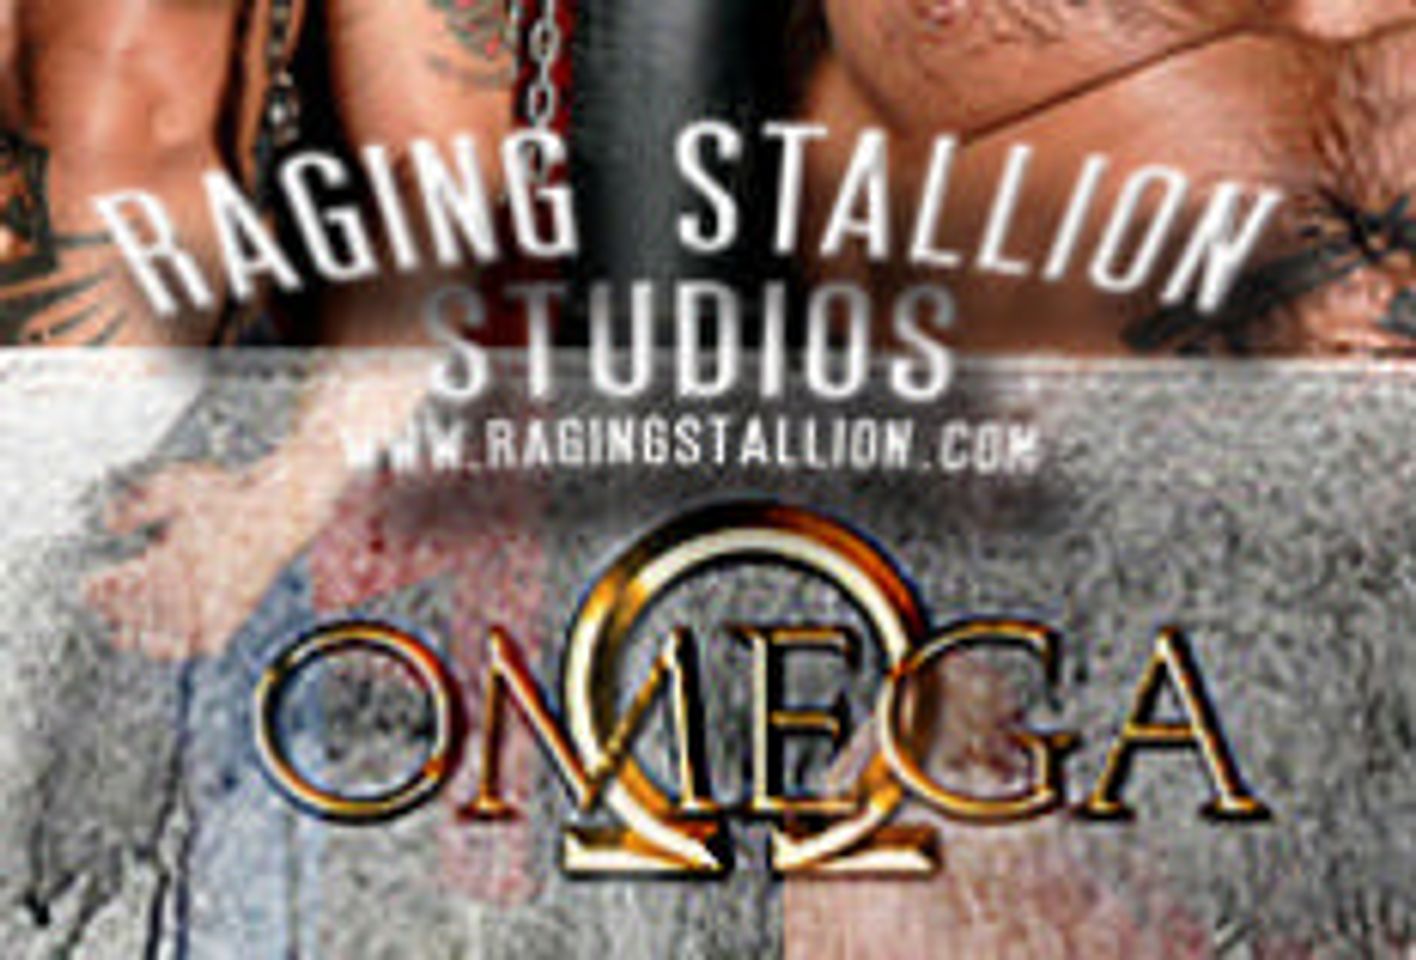 Jake Deckard Named Raging Stallion's 2007 Man of the Year